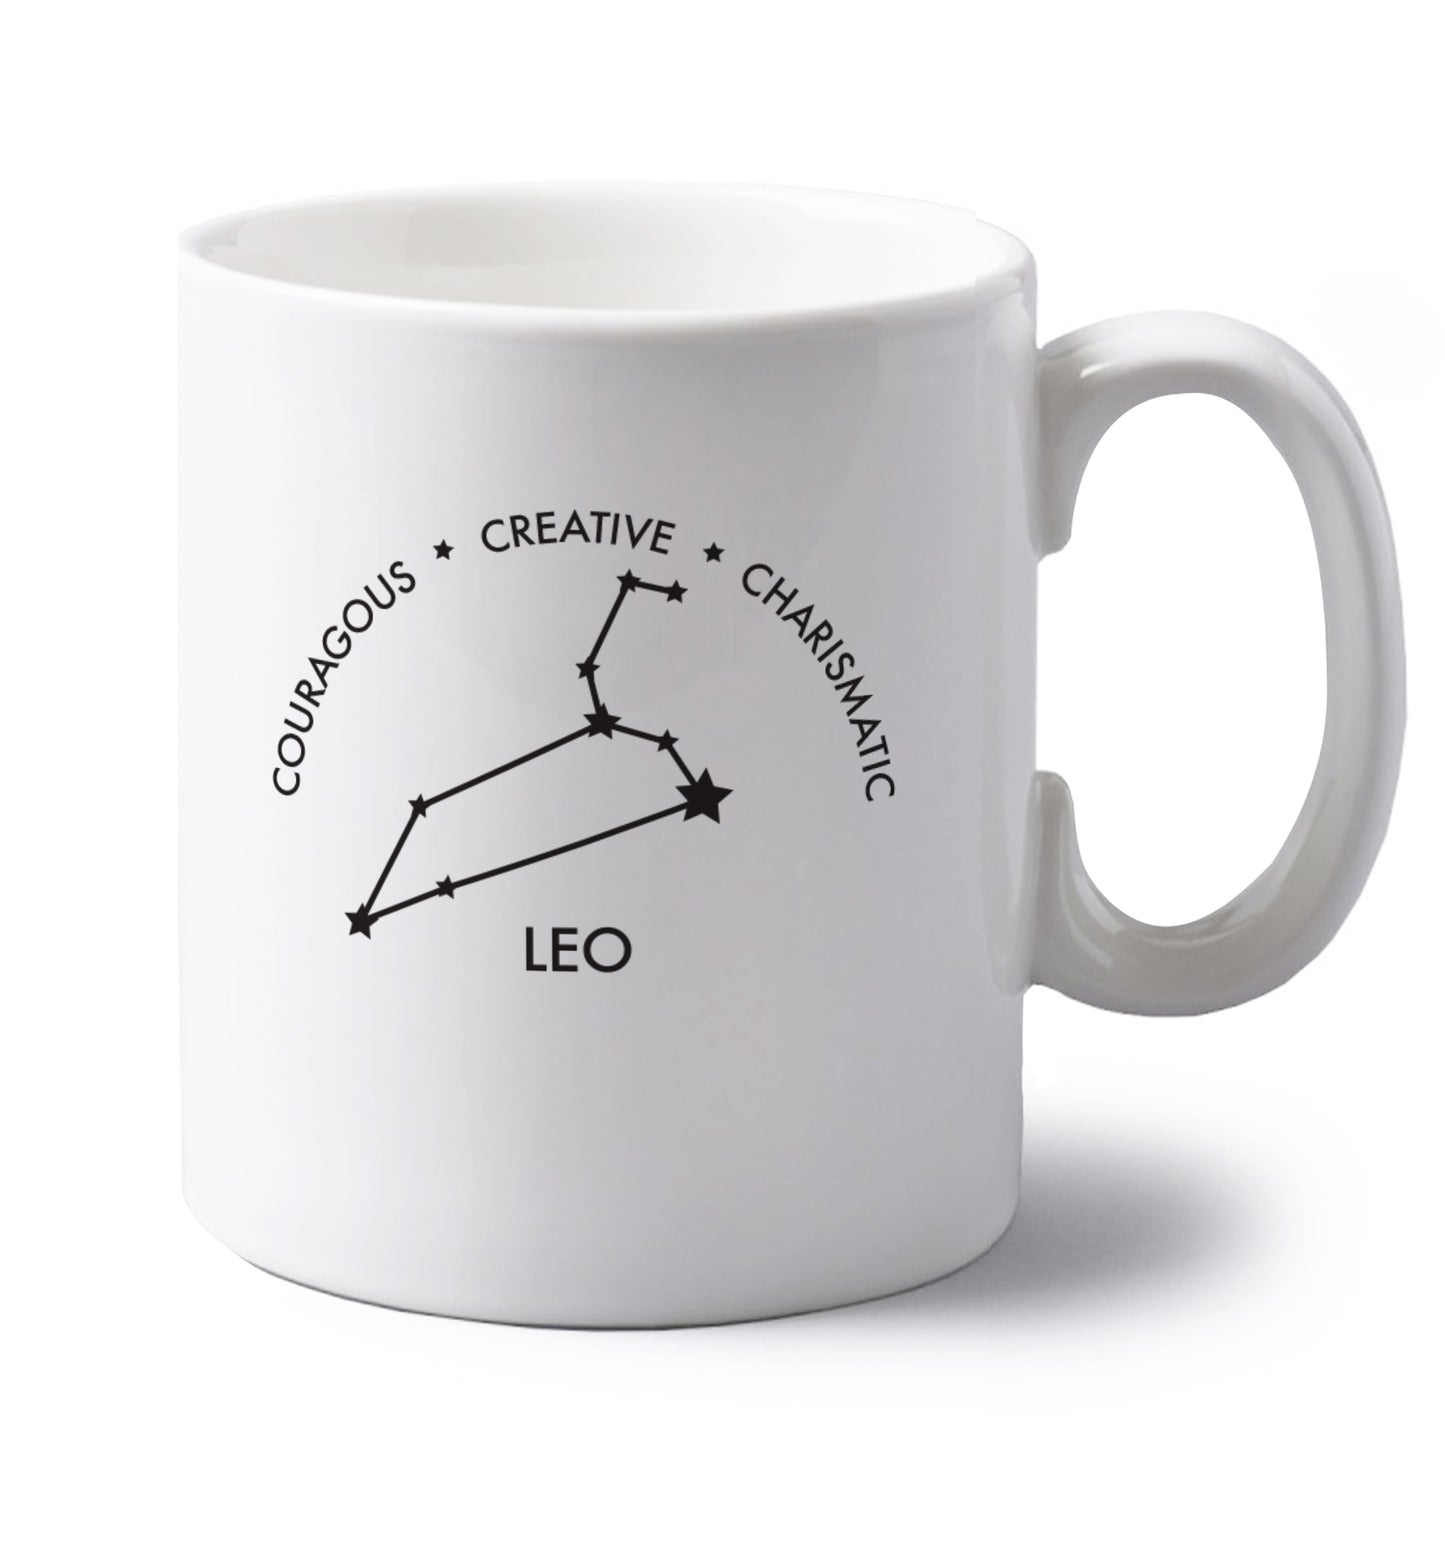 Leo - Courageous | Creative | Charismatic left handed white ceramic mug 